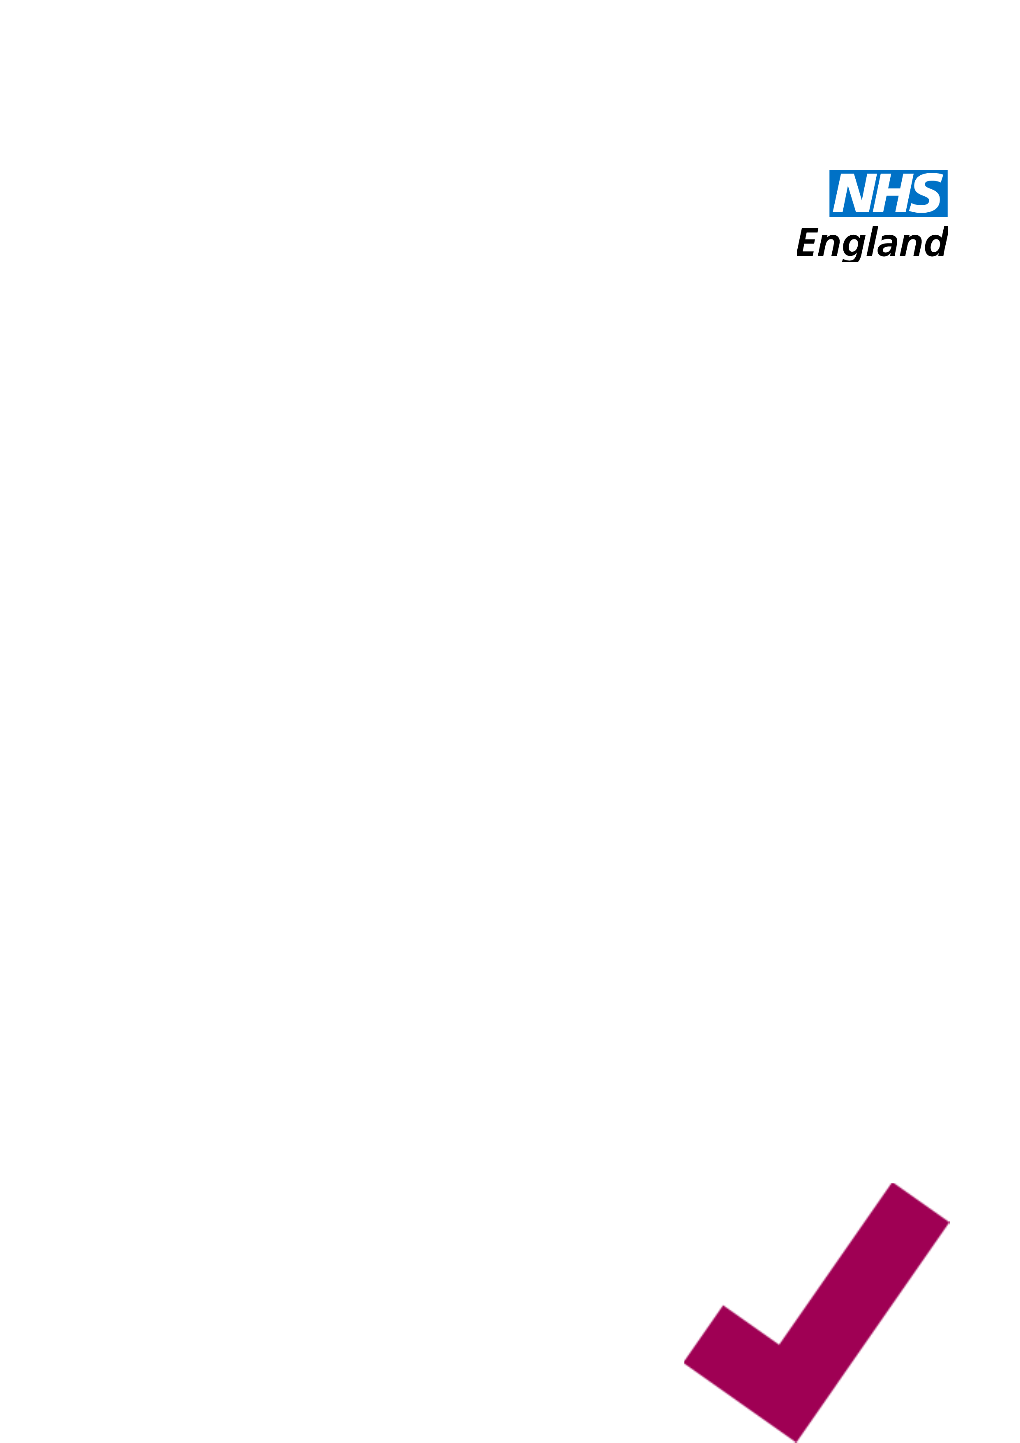 NHS England Report Template 7 - No Photo (Sensitive Subject Matter)